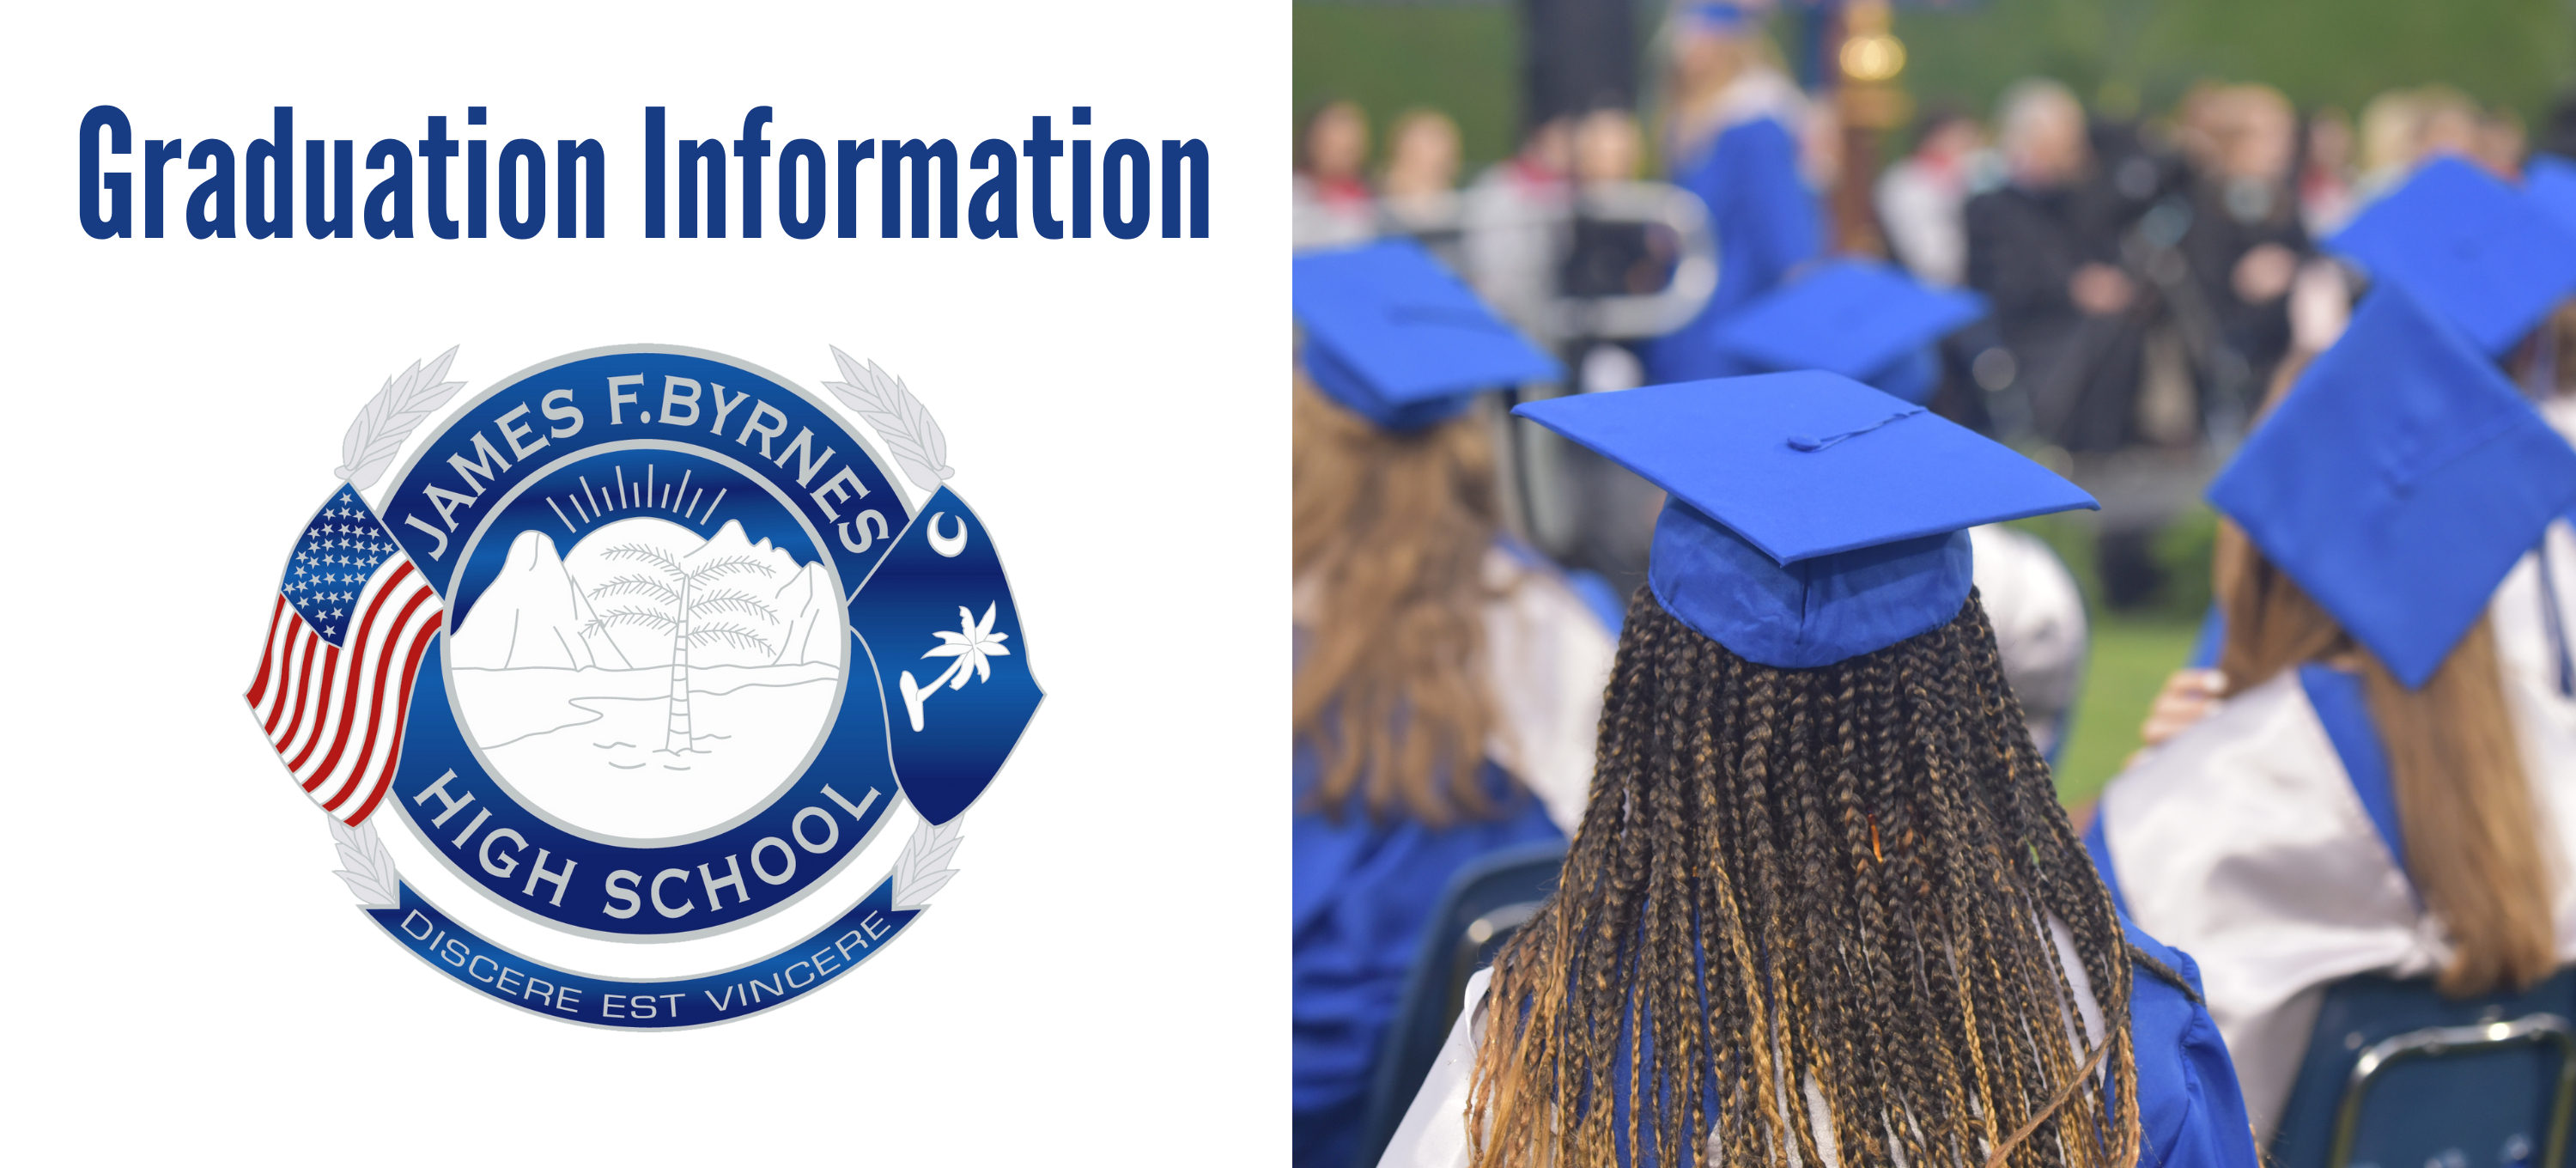 graduation information graphic